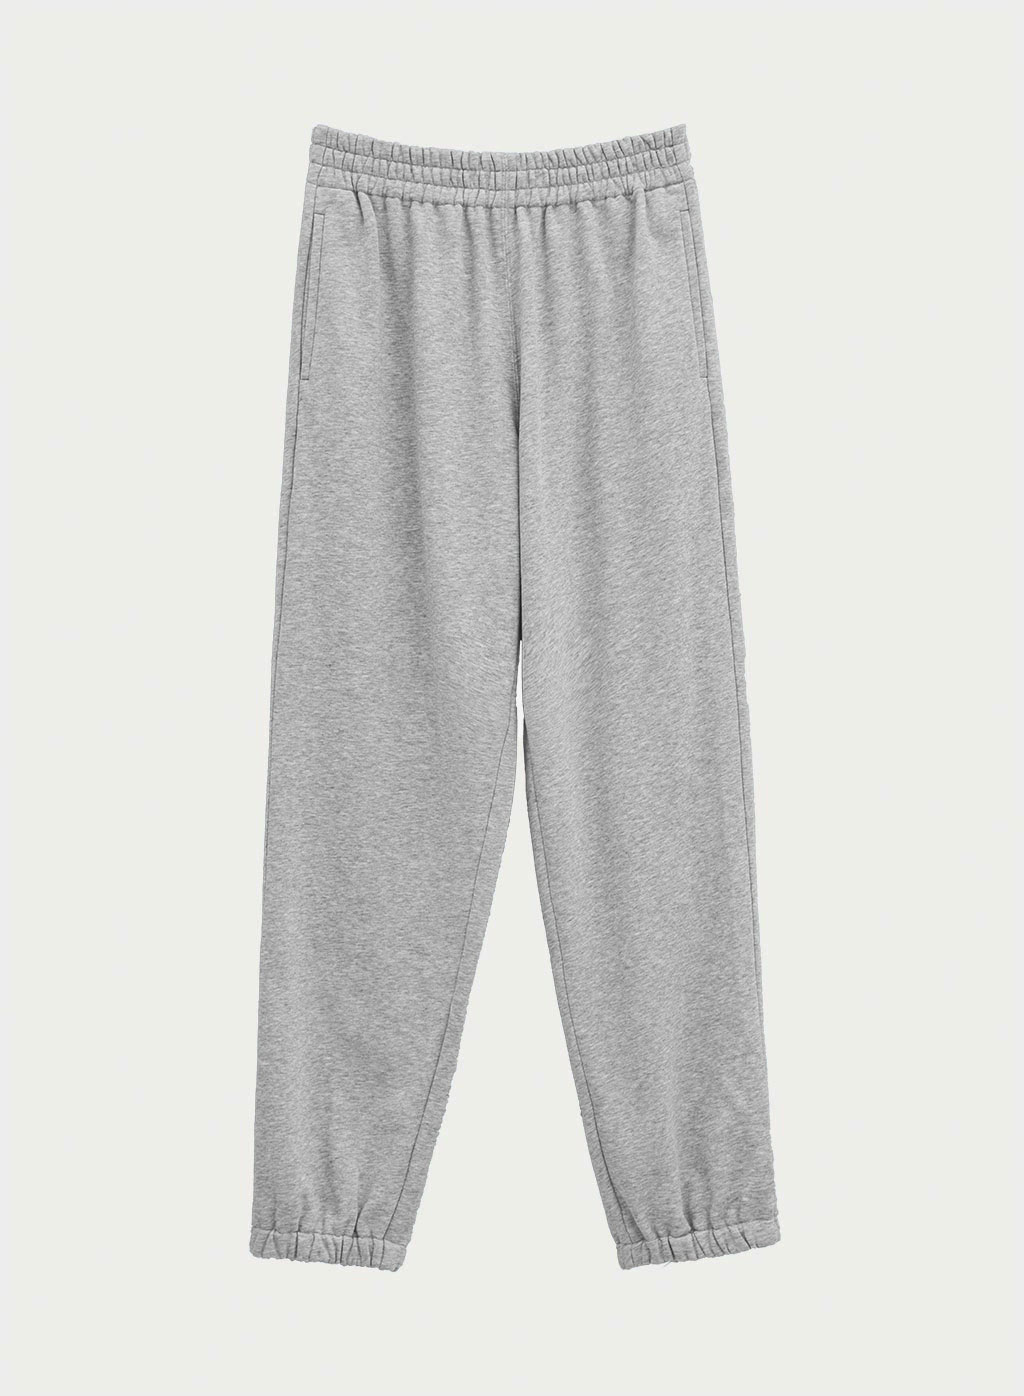 Grey Drawstring Sweatpants | High-Waist Side Pockets Joggers | NAP